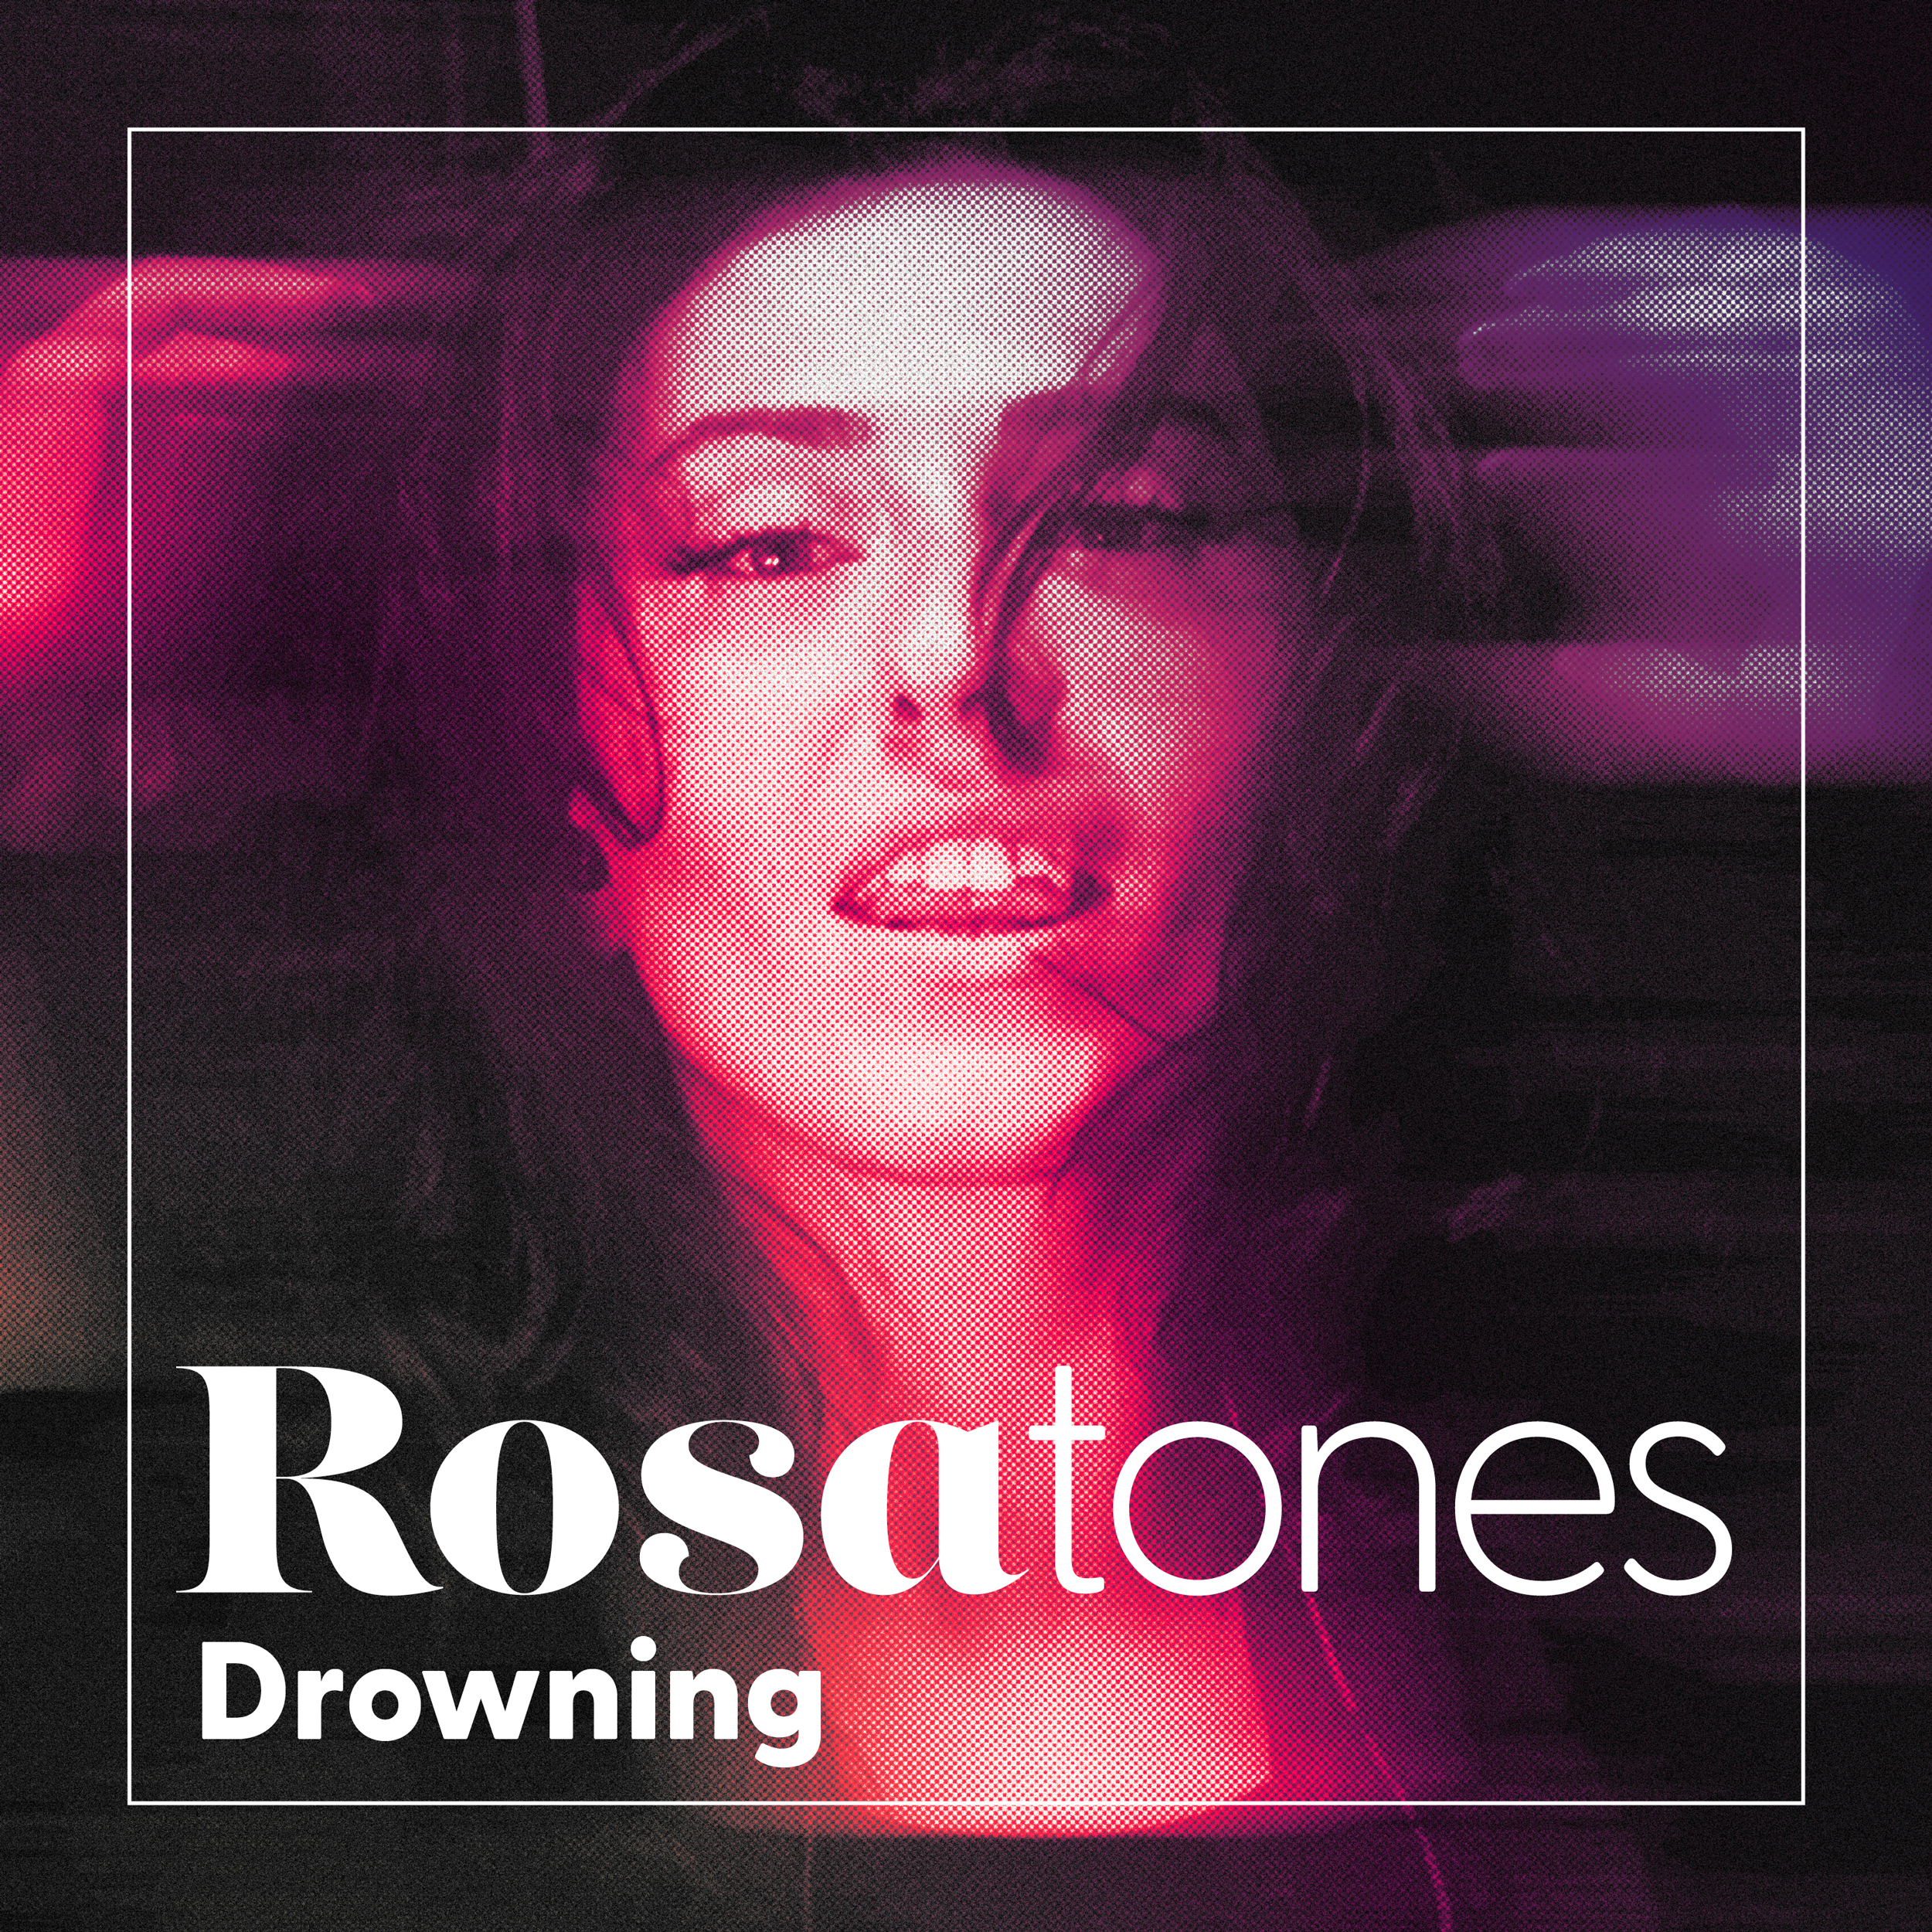 Rosatones Cover Drowning